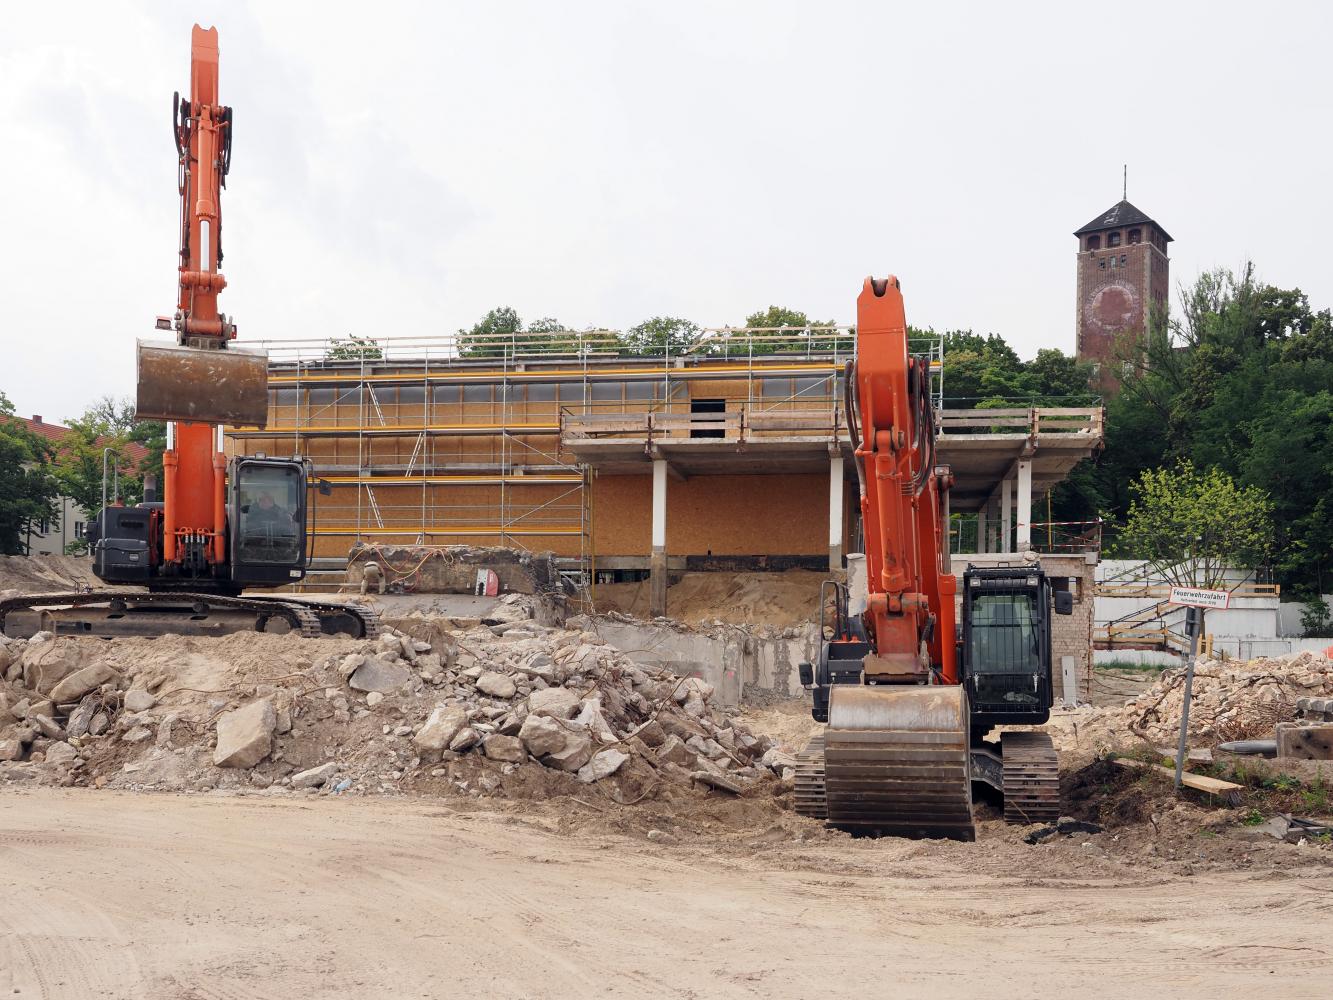 Baustelle "Minsk" auf dem Brauhausberg 